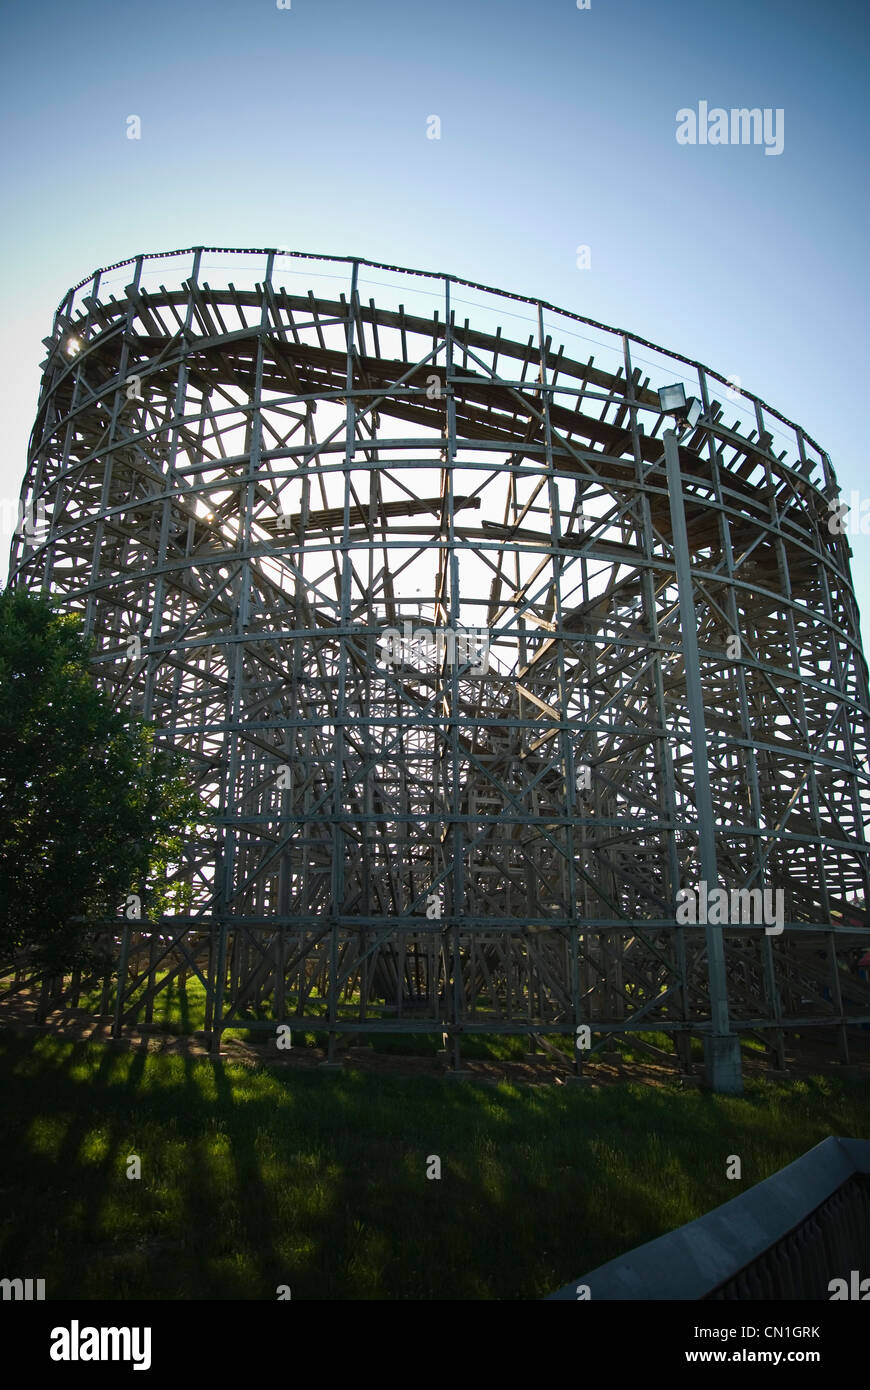 Wooden Roller Coaster Stock Photo